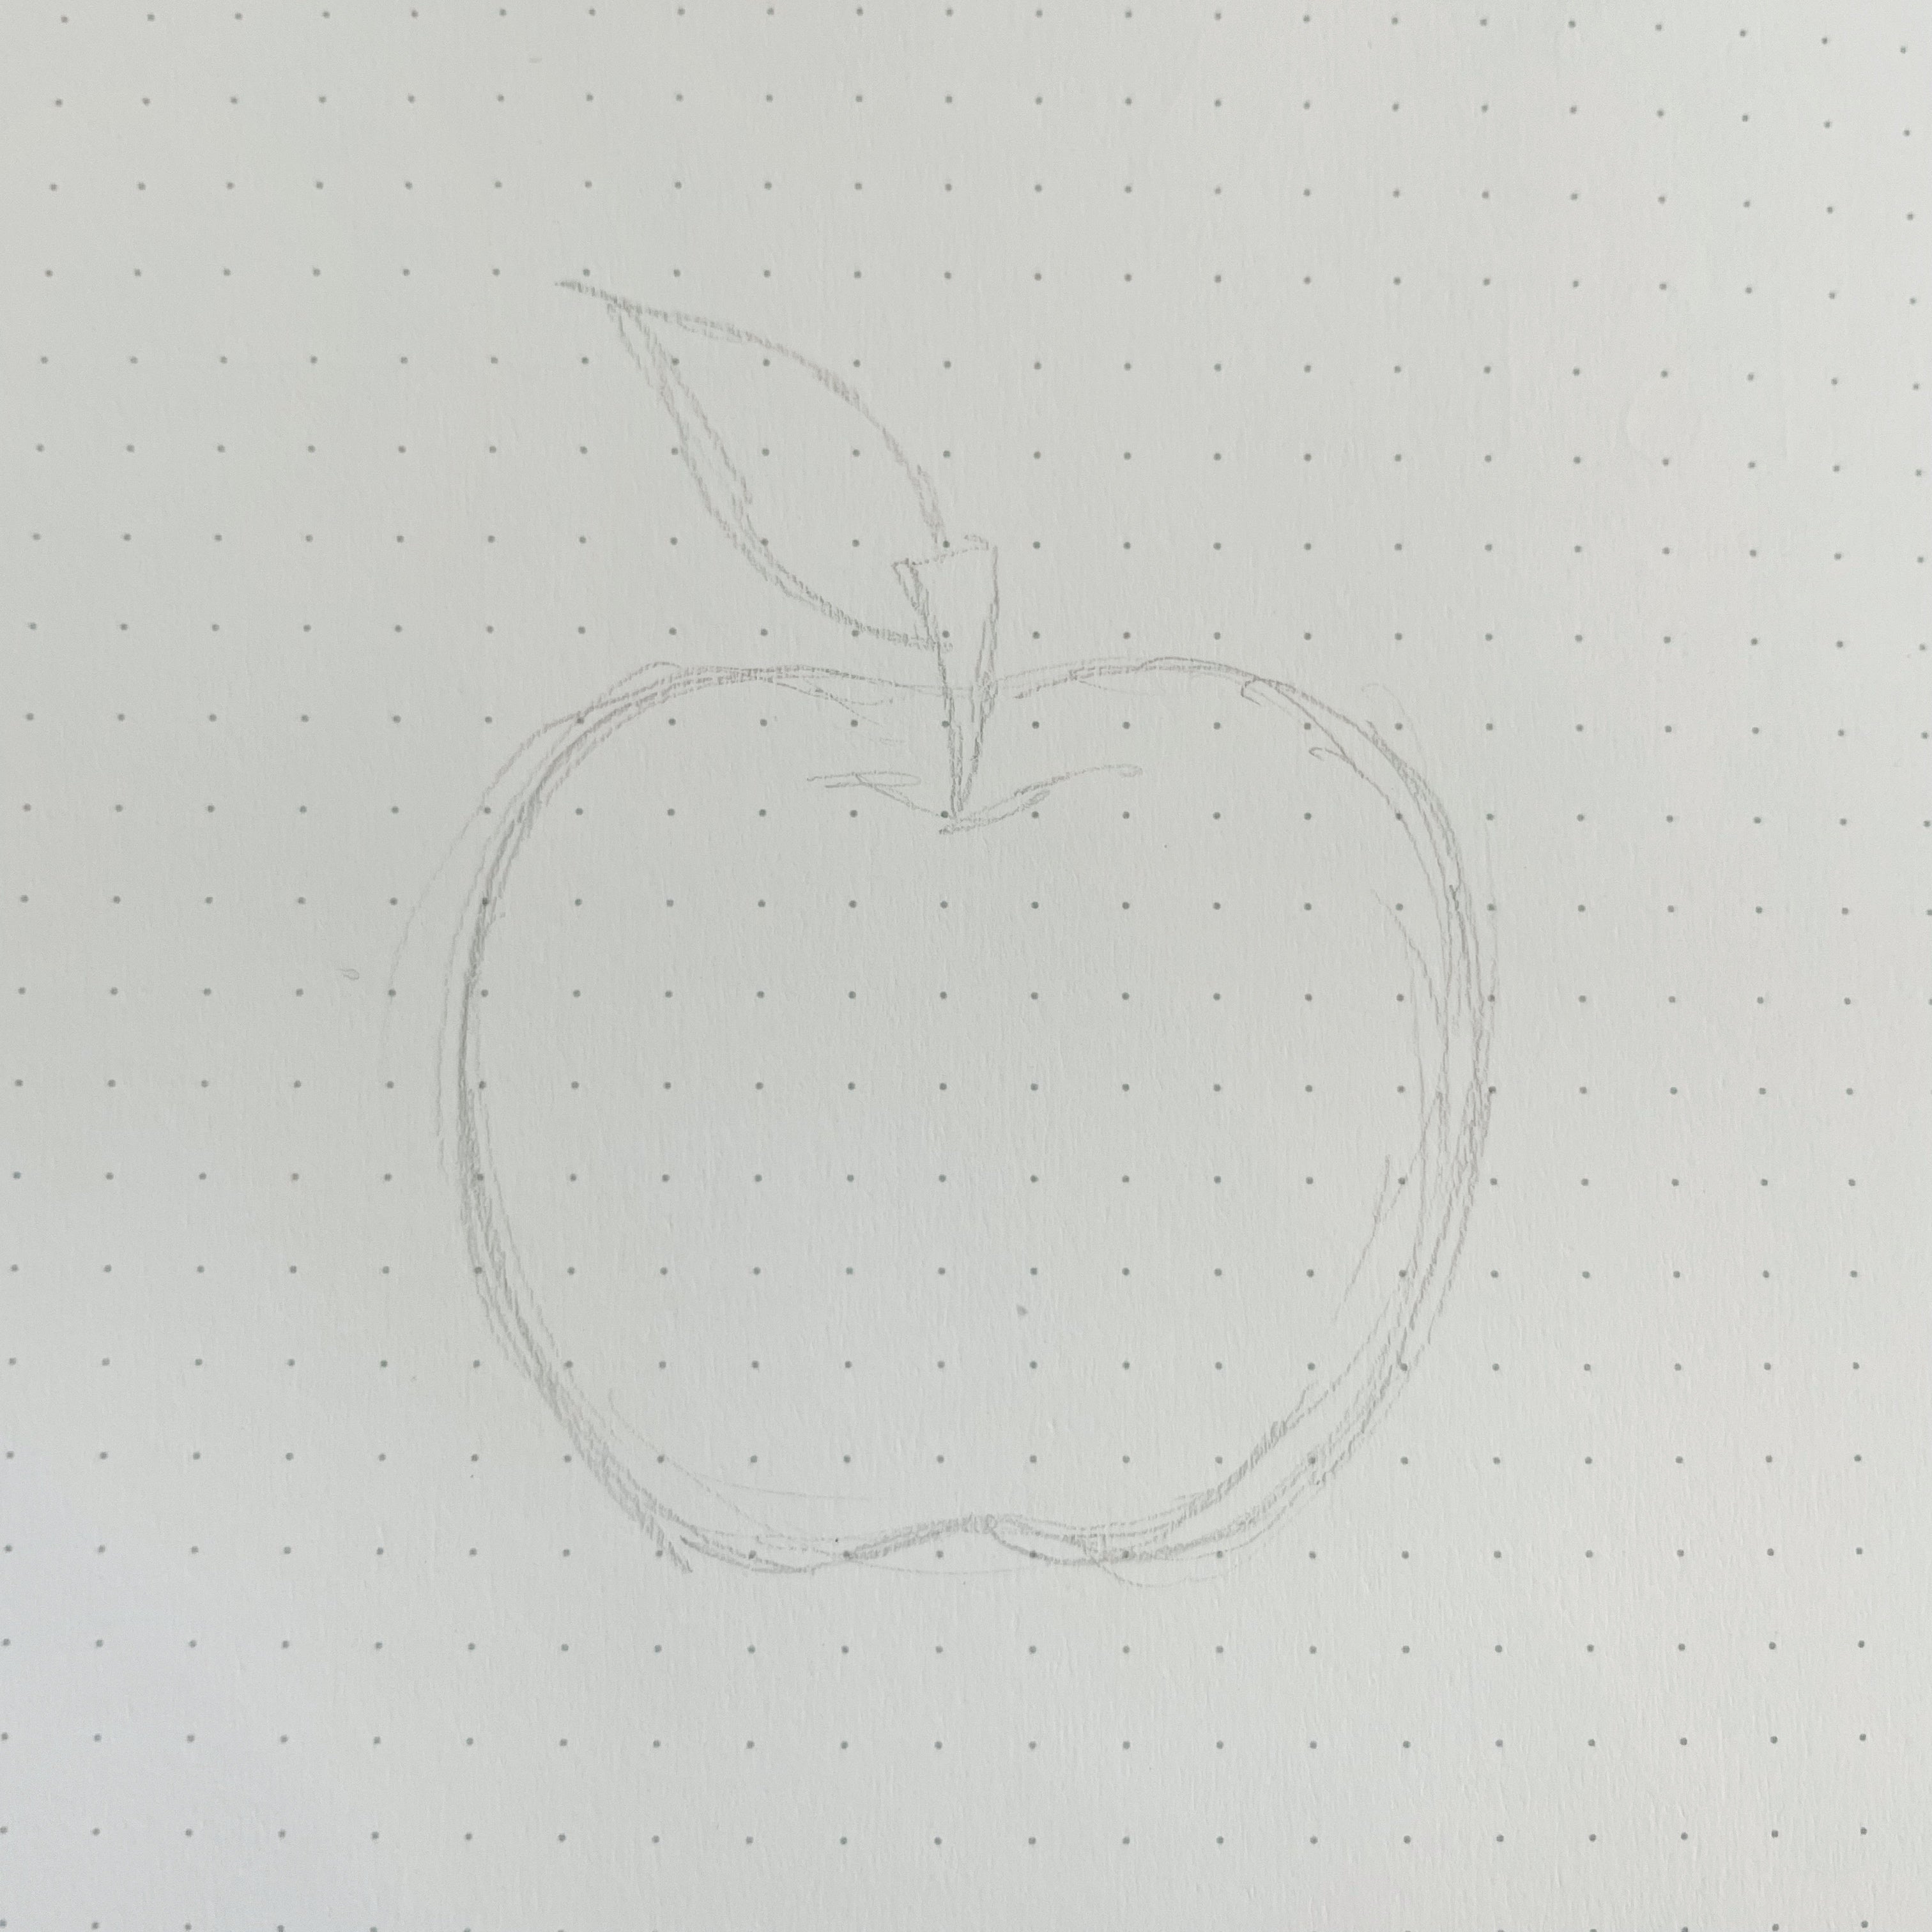 sketch of apple